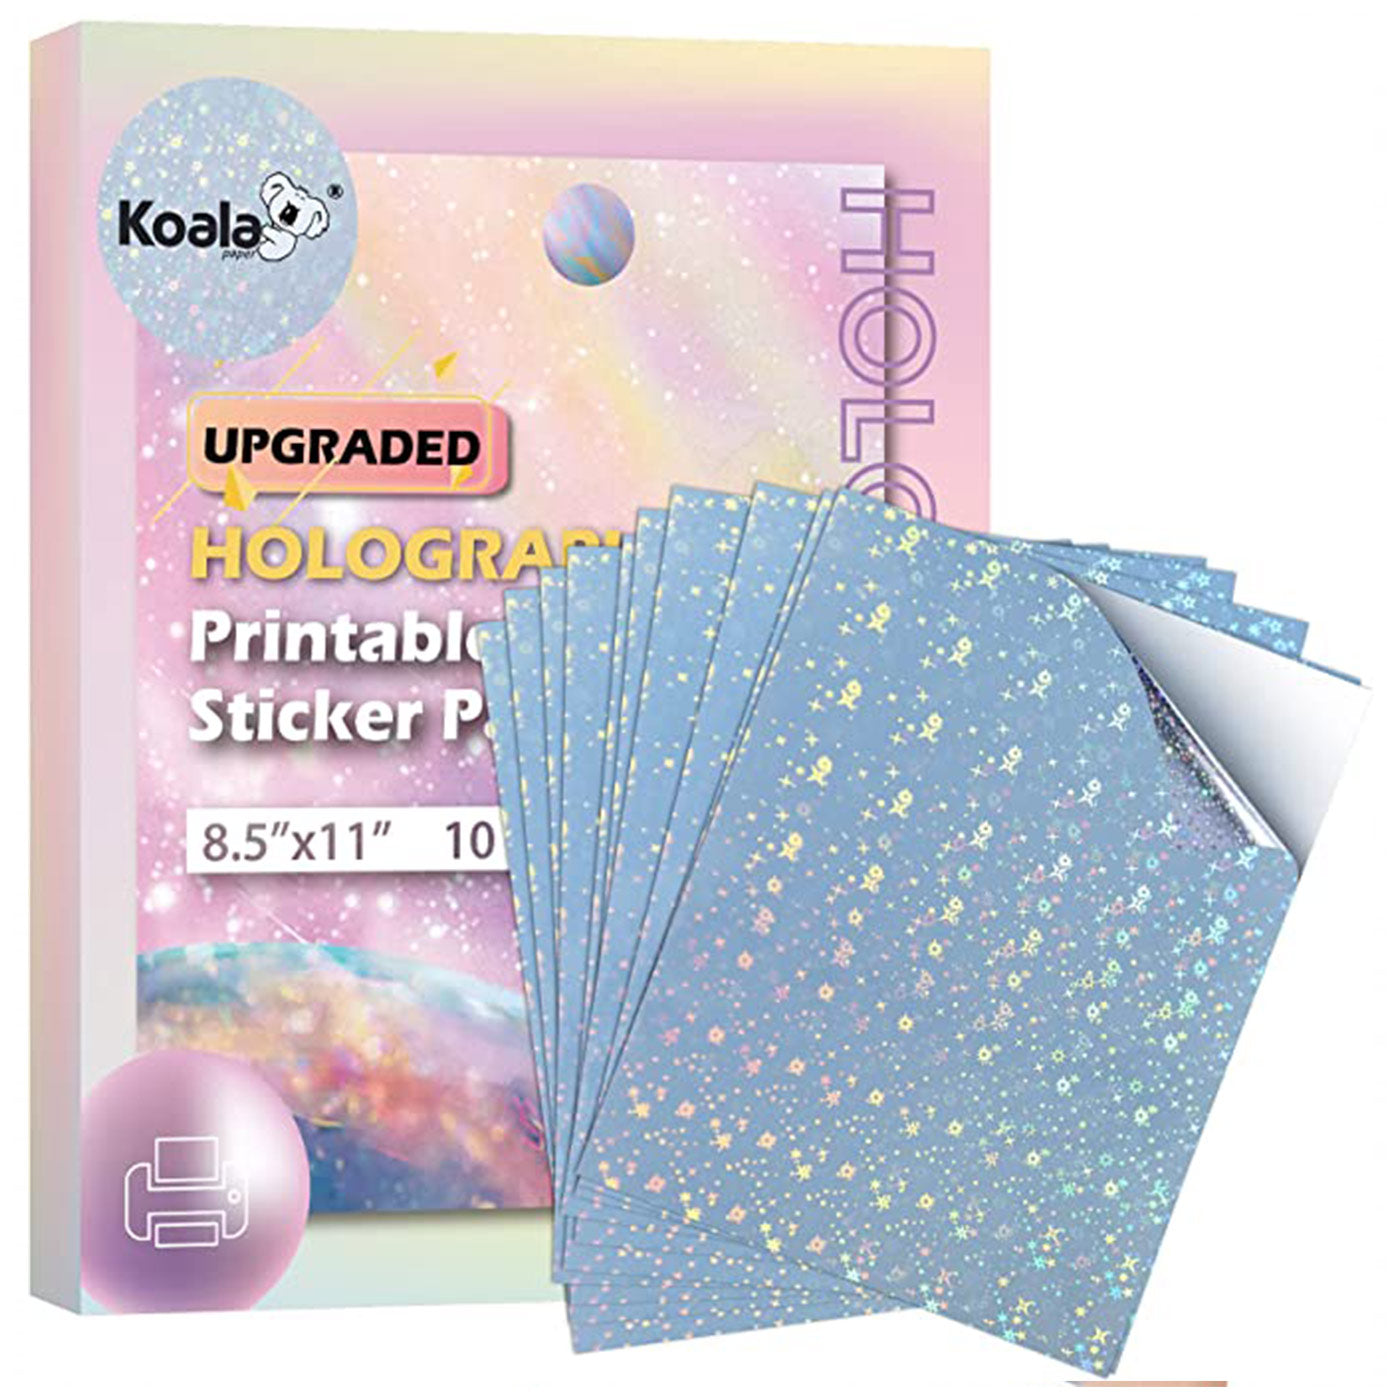 Koala Printable Glossy Sticker Paper for Inkjet Printer, White, 8.5x11 Inch  Self-Adhesive Photo Sticker Printer Paper, (120 Sheets)